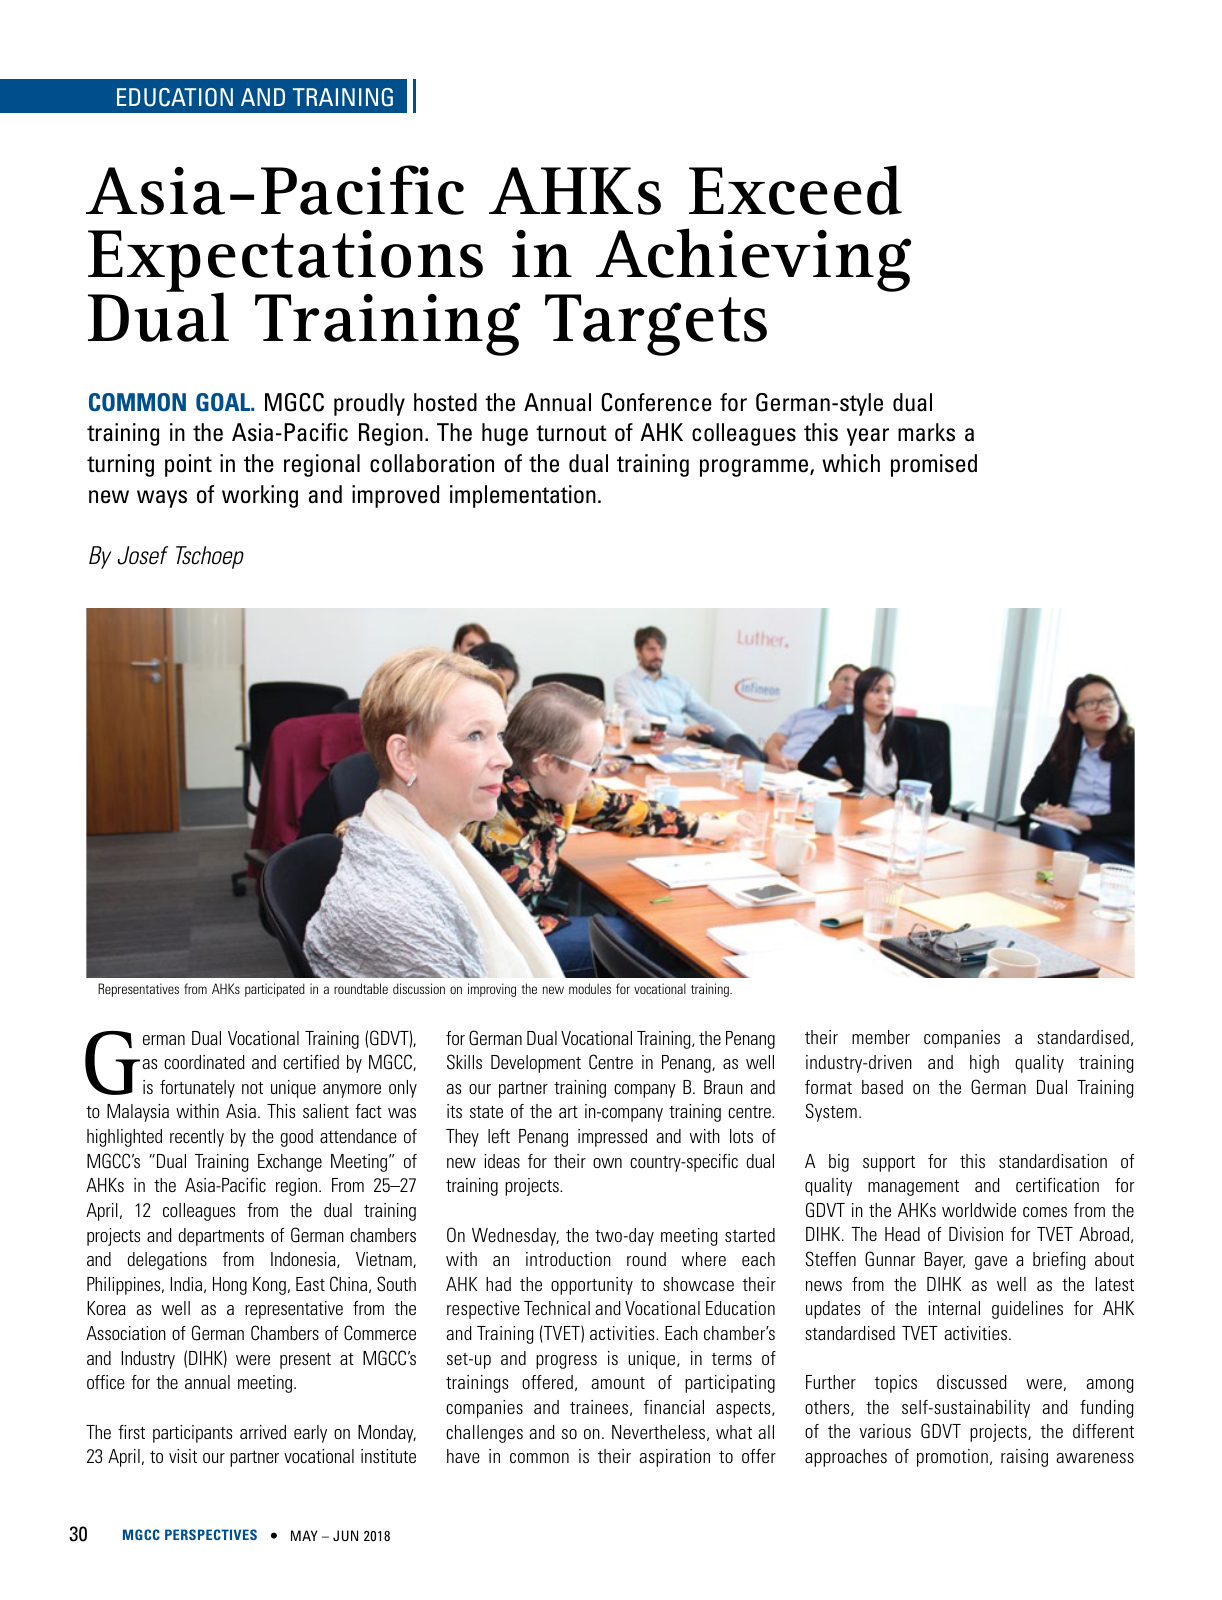 Vorschau MGCC Perspectives May/Jun 2018 Seite 32